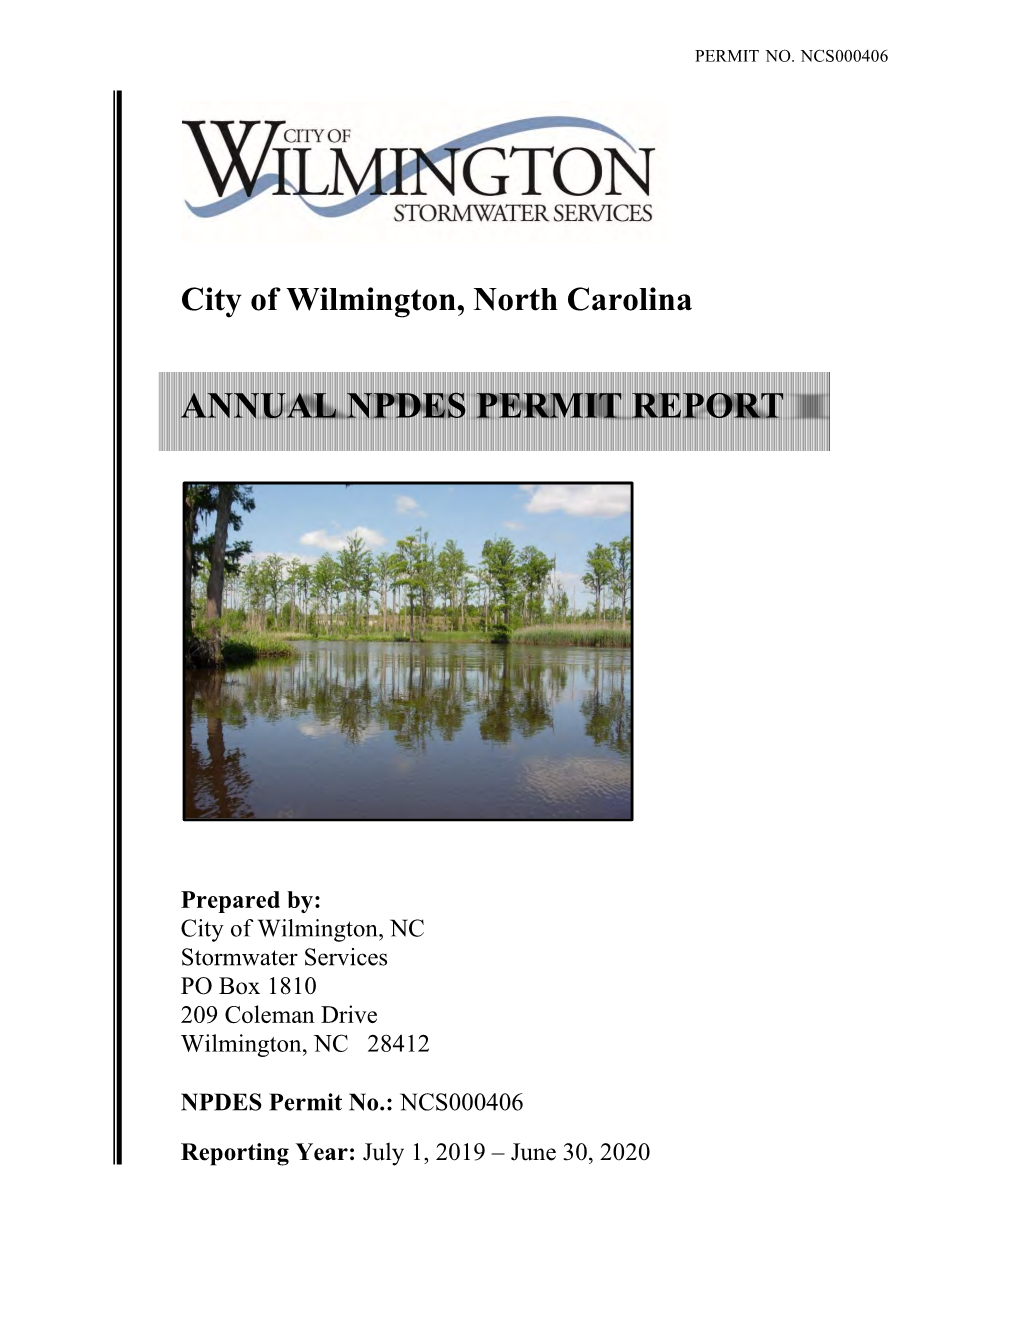 Annual Npdes Permit Report